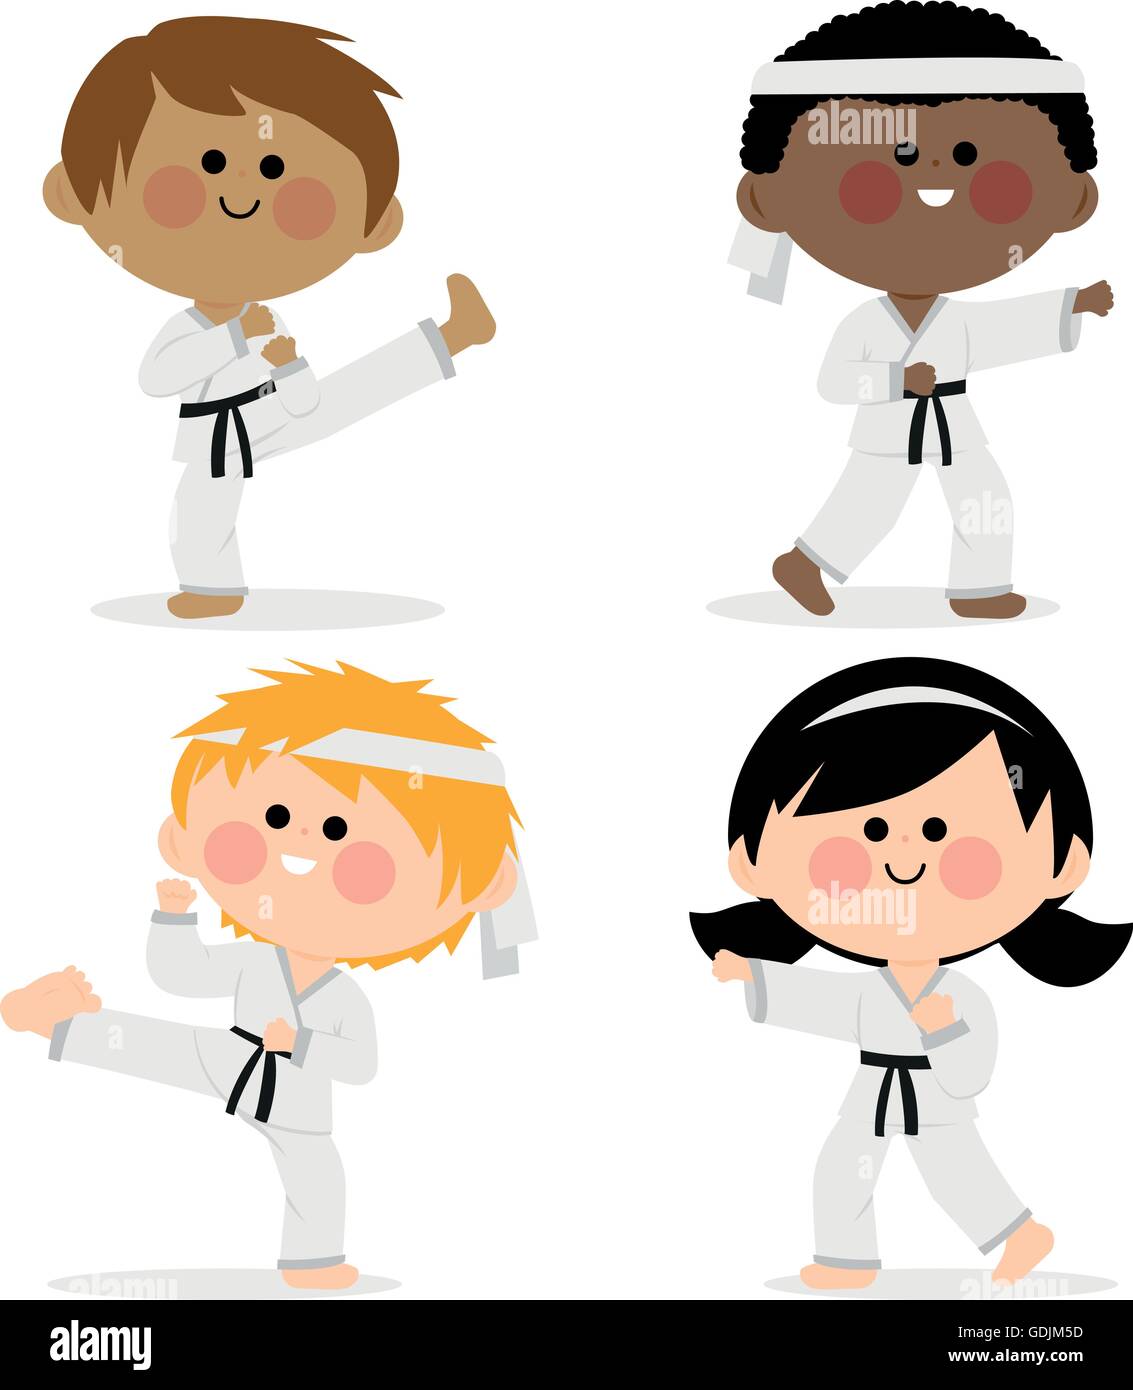 Gruppe von Kindern in Martial Arts Uniformen: Karate, Taekwondo, Judo, Jiu-Jitsu, Kickboxen und Kung Fu Stock Vektor